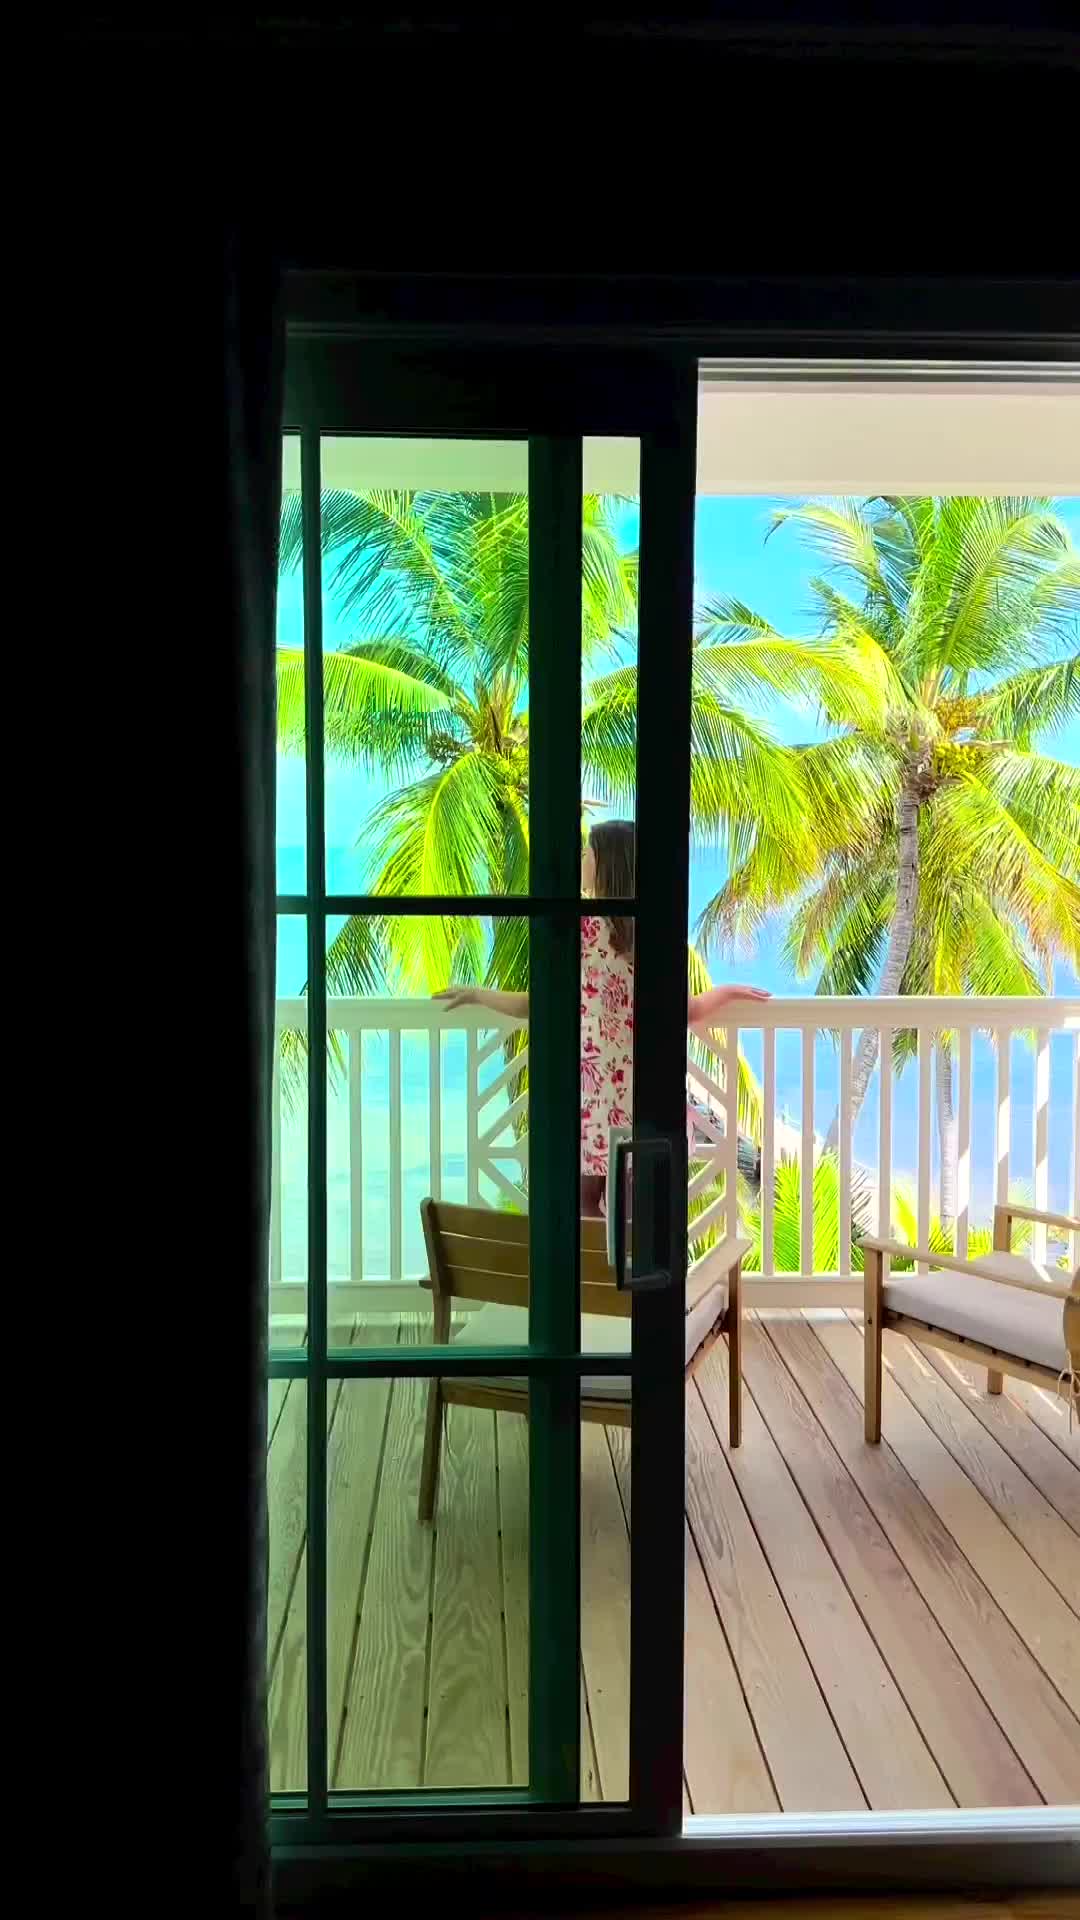 Stunning Views at Grassy Flats Resort in the Florida Keys